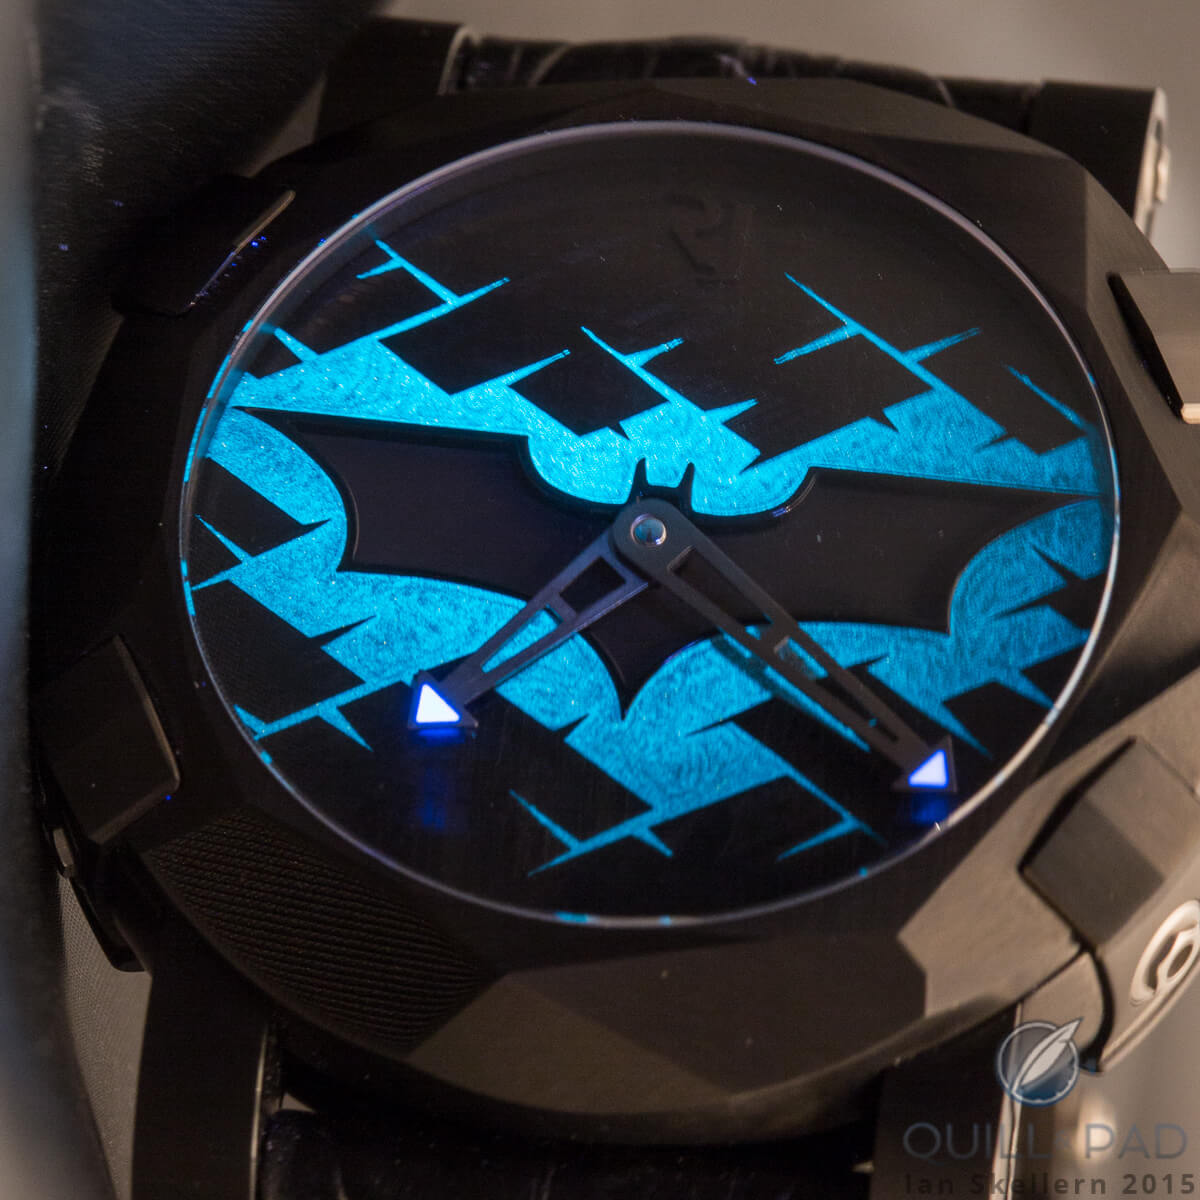 The glow-in-the-dark bat symbol of the Romain Jerome Batman-DNA